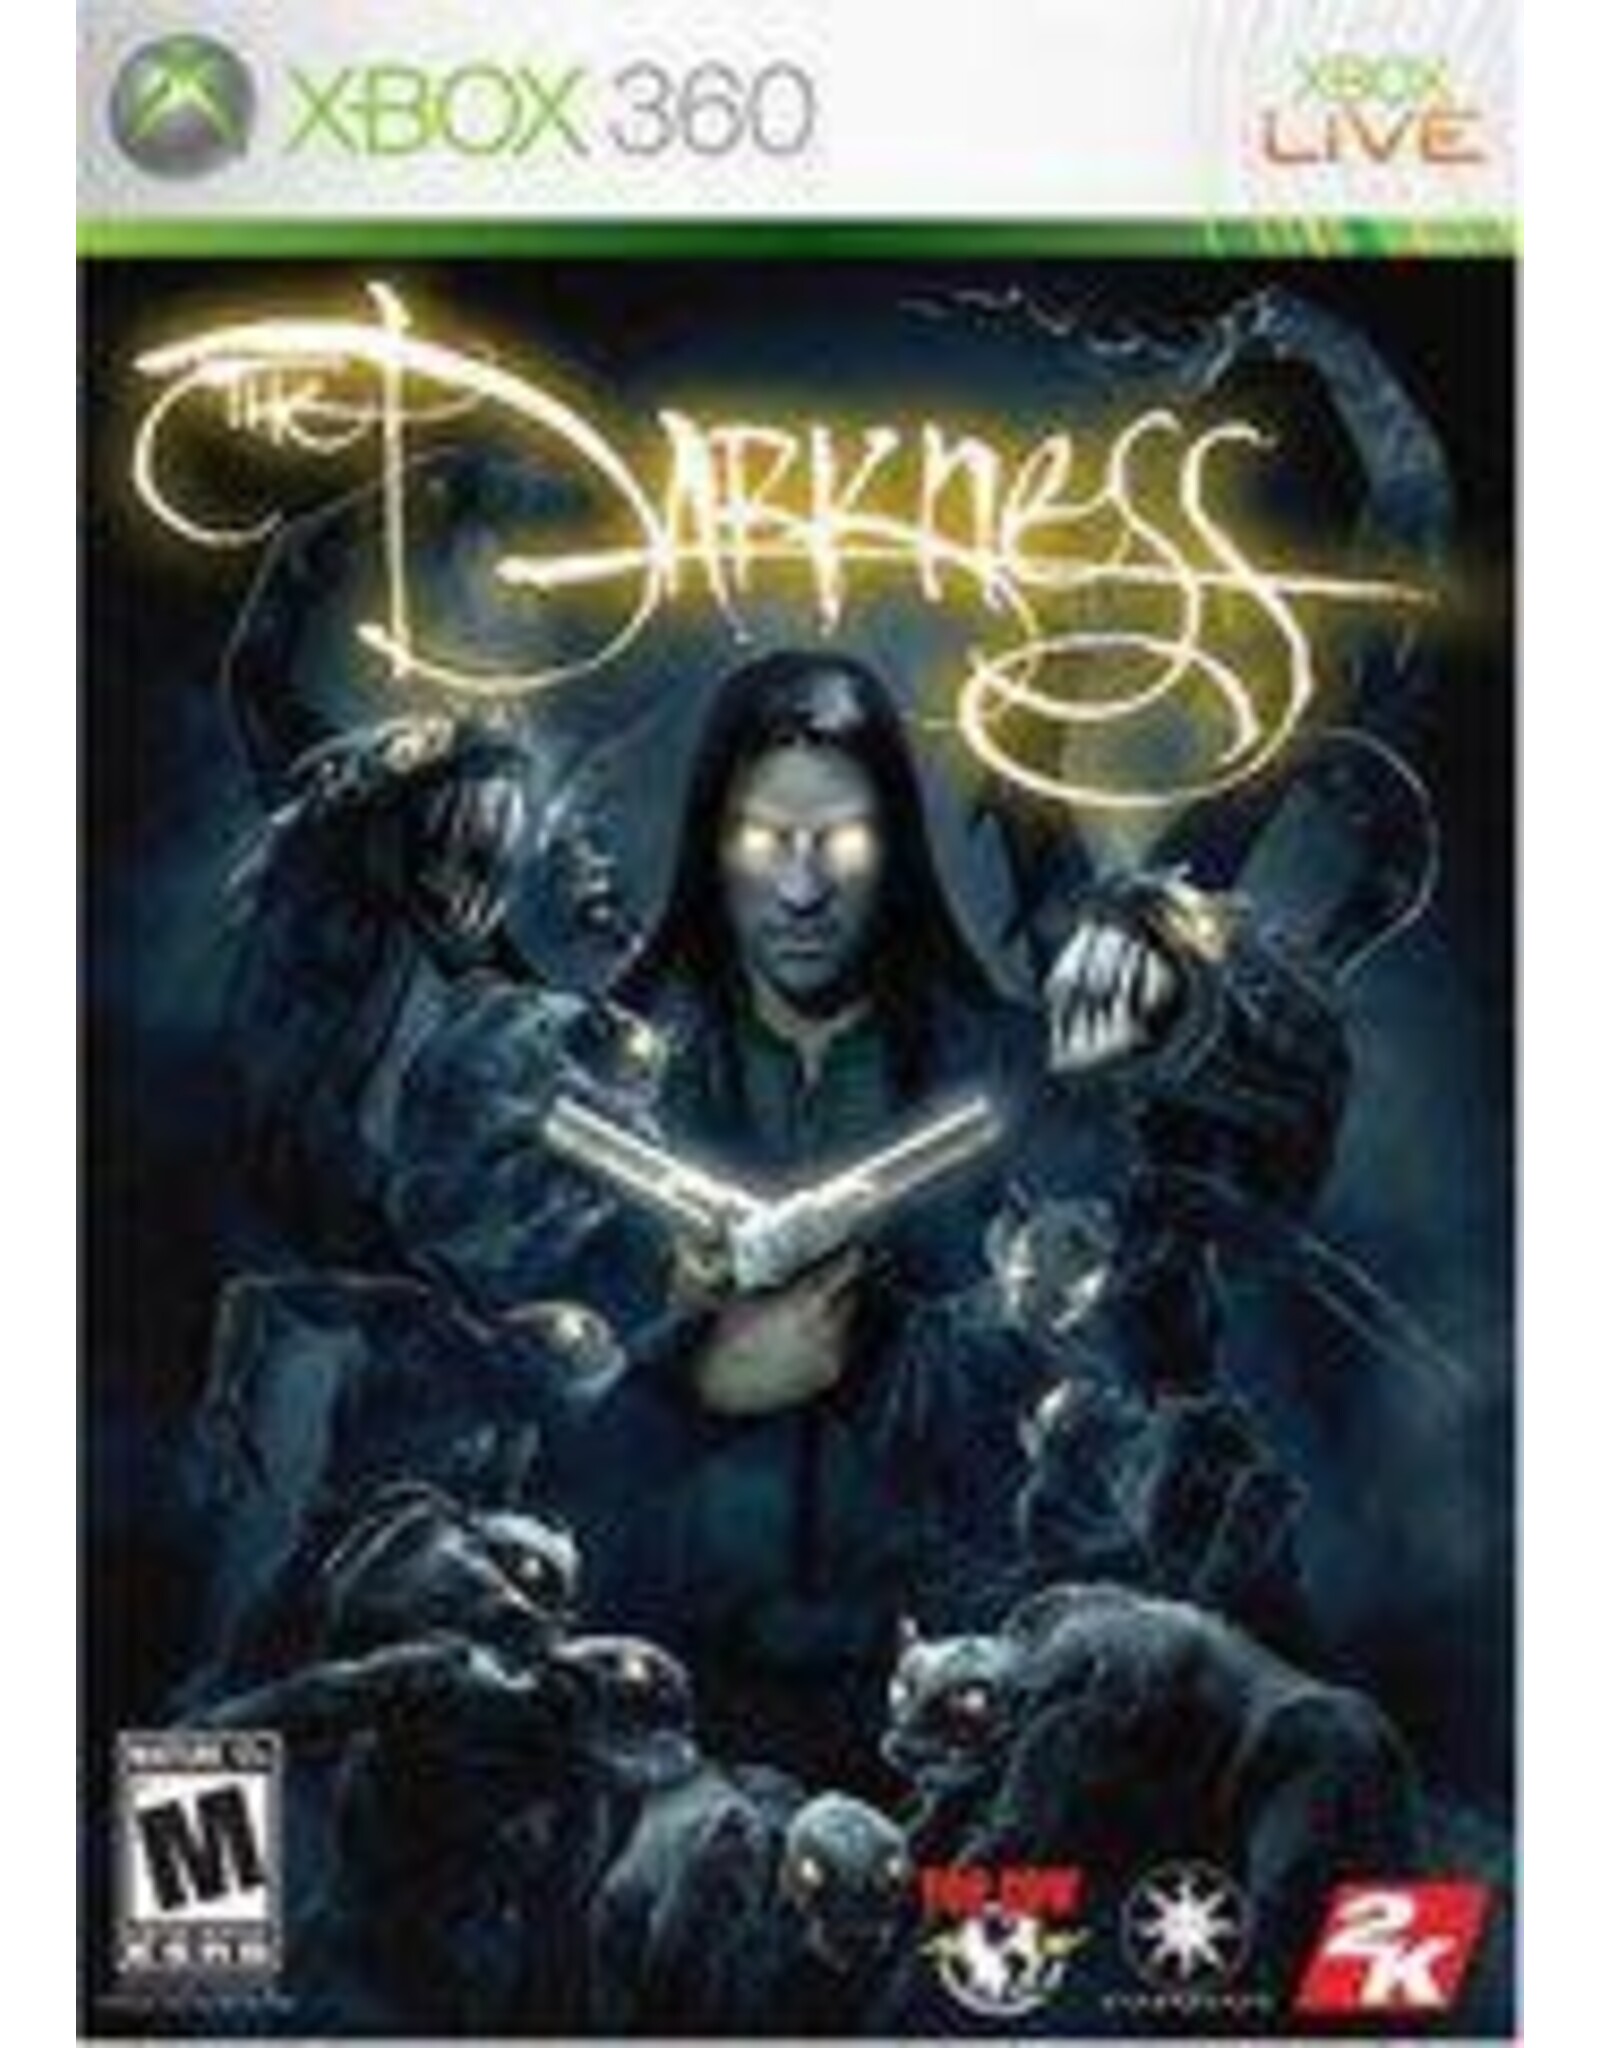 Xbox 360 Darkness, The (Brand New)